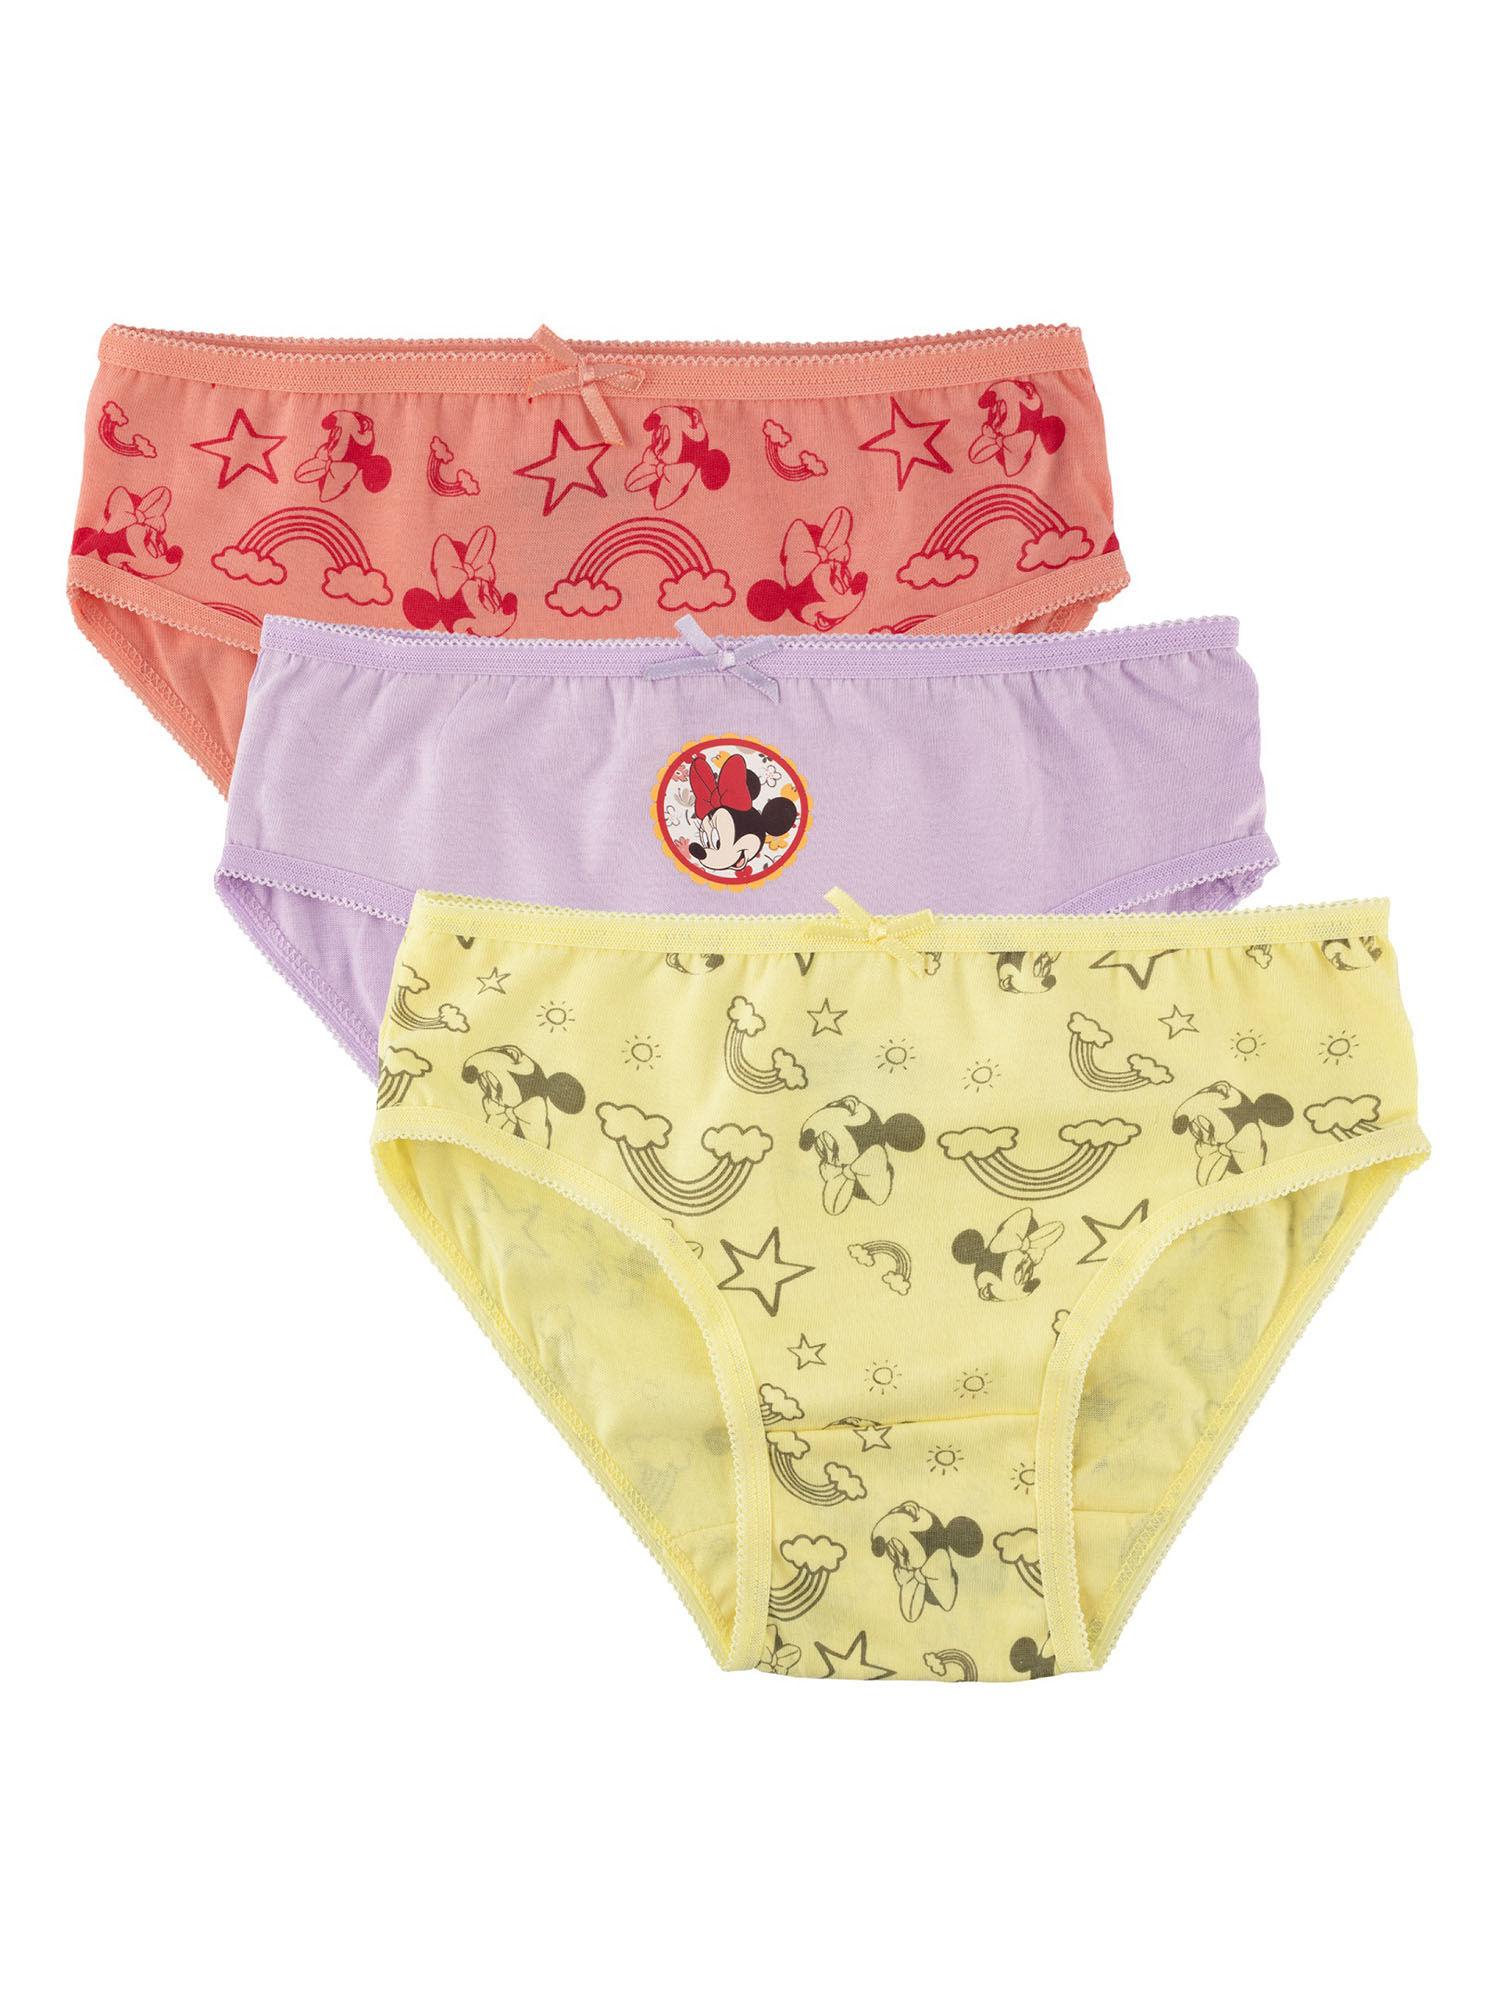 girls-minnie-mouse-printed-brief-underwear-innerwear-multicolor-(pack-of-3)